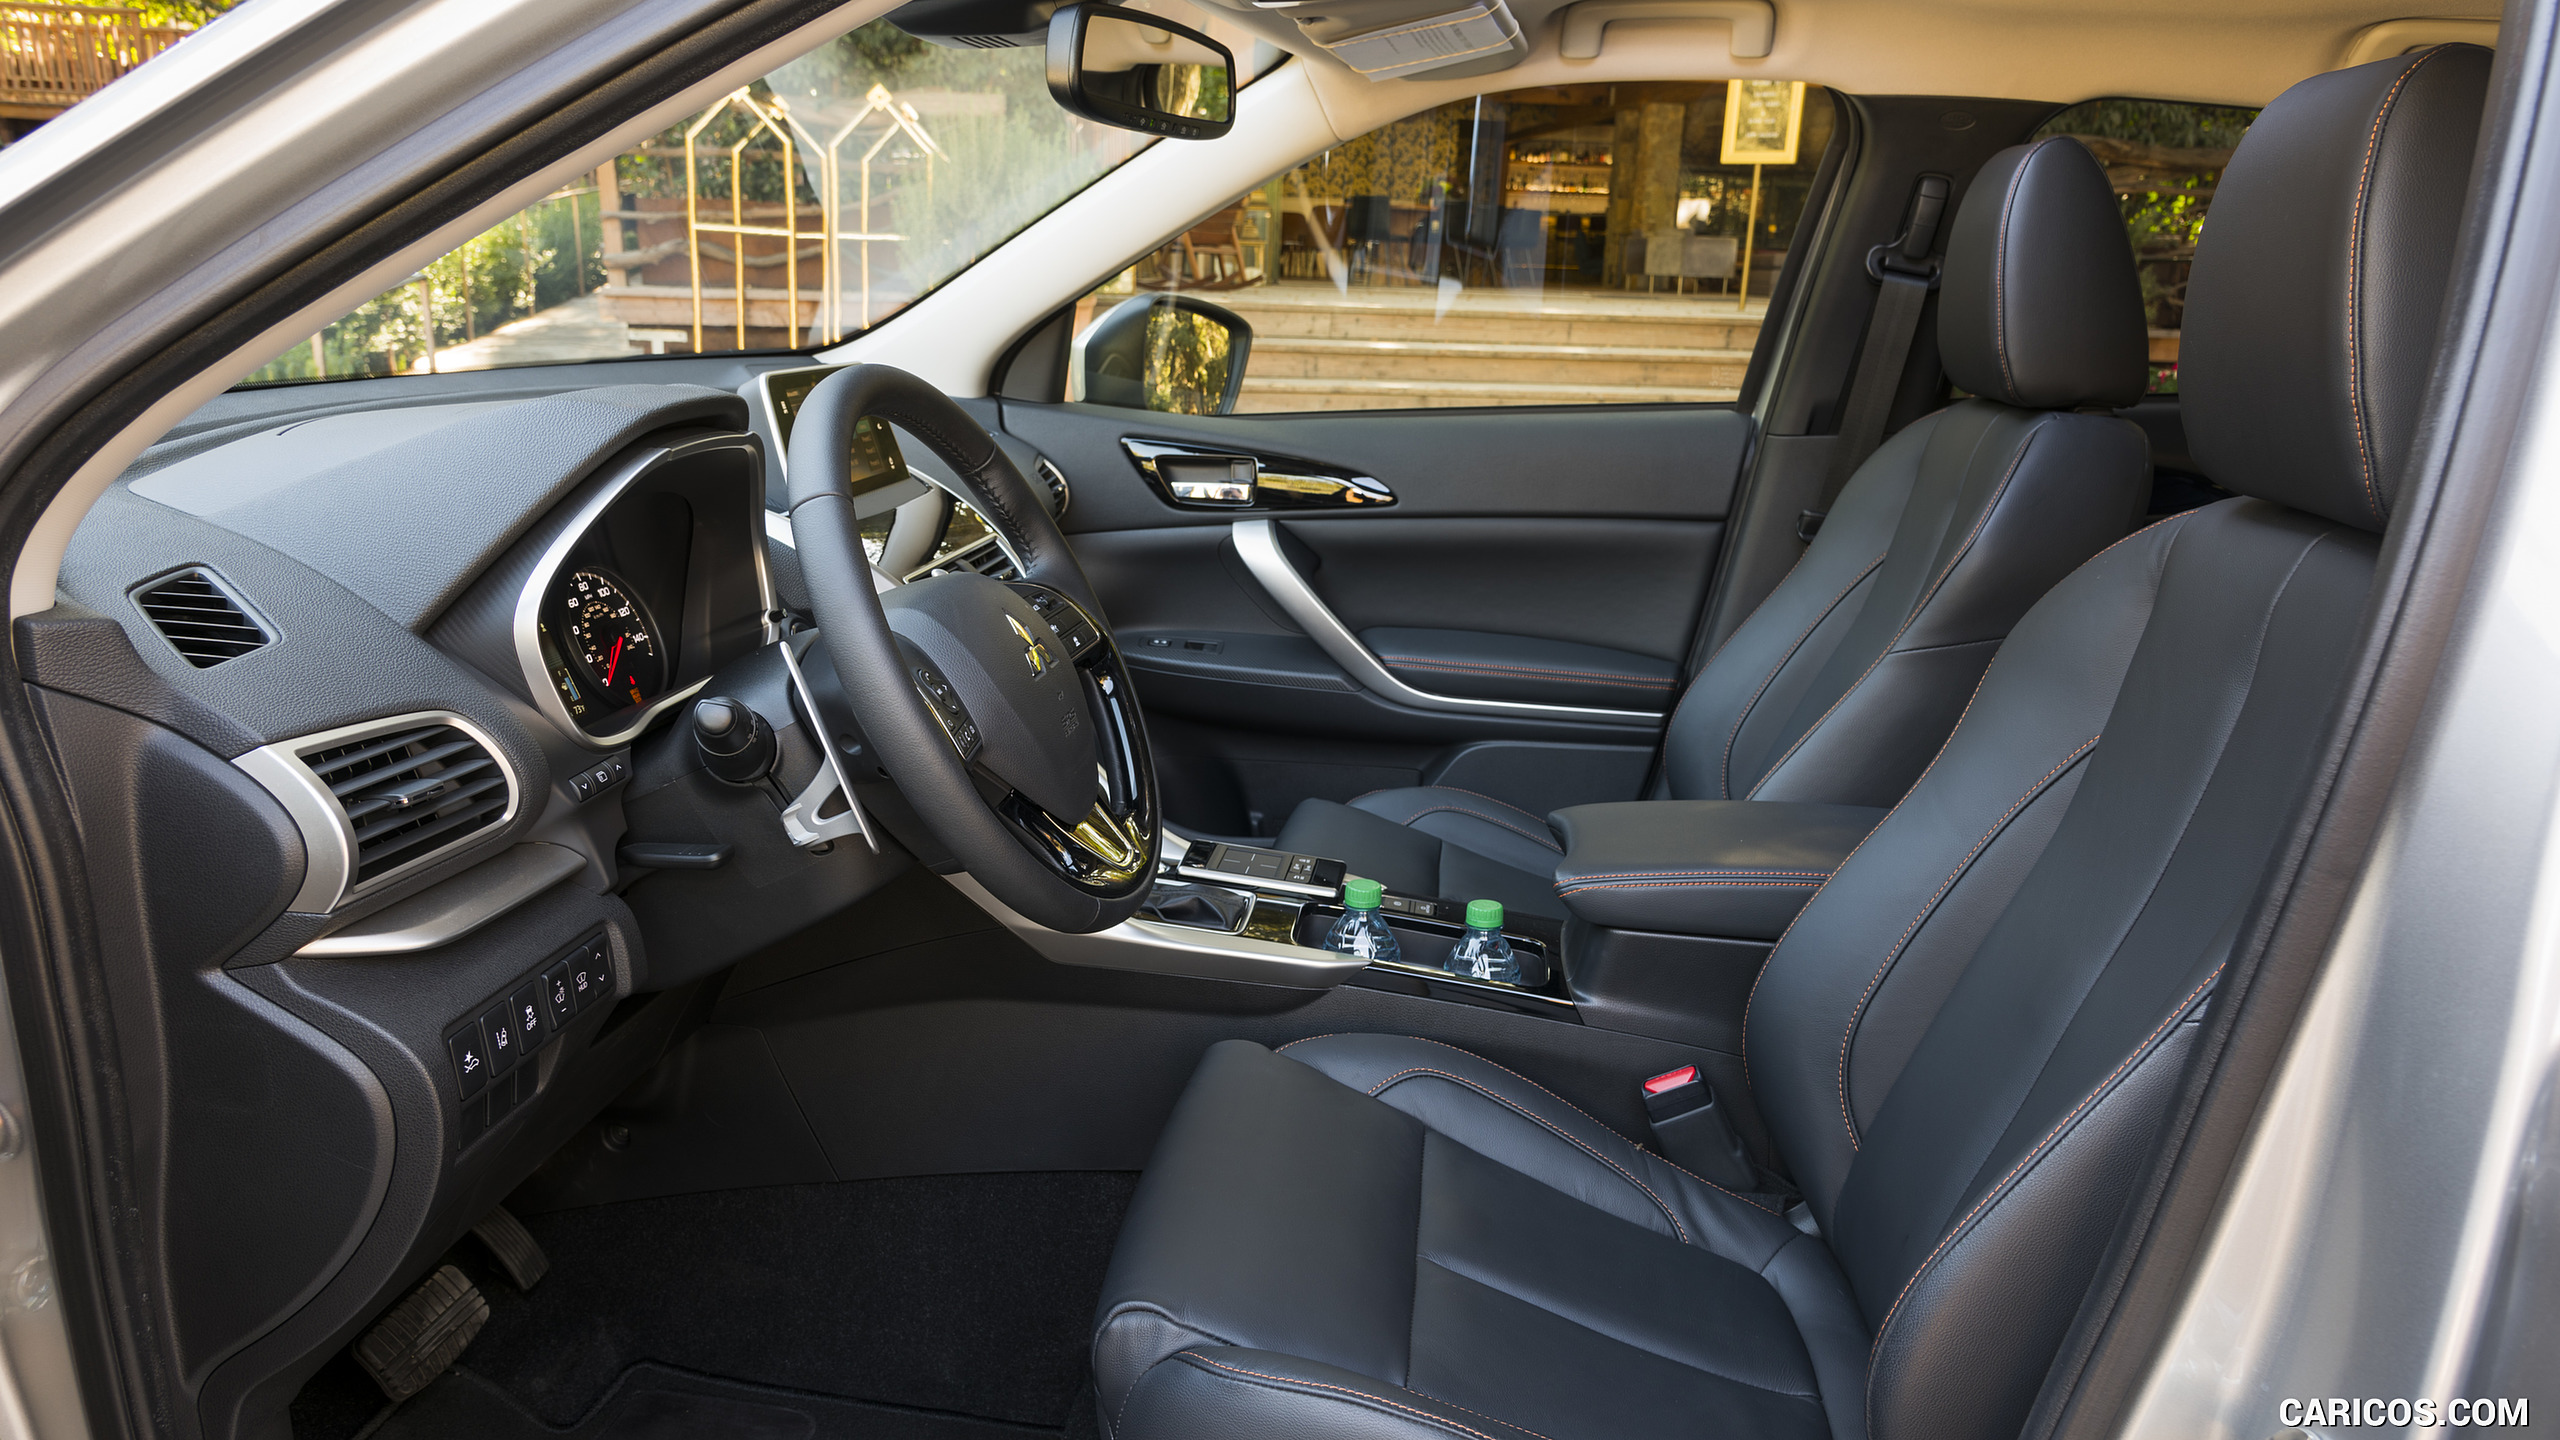 2018 Mitsubishi Eclipse Cross - Interior, Front Seats, #171 of 173